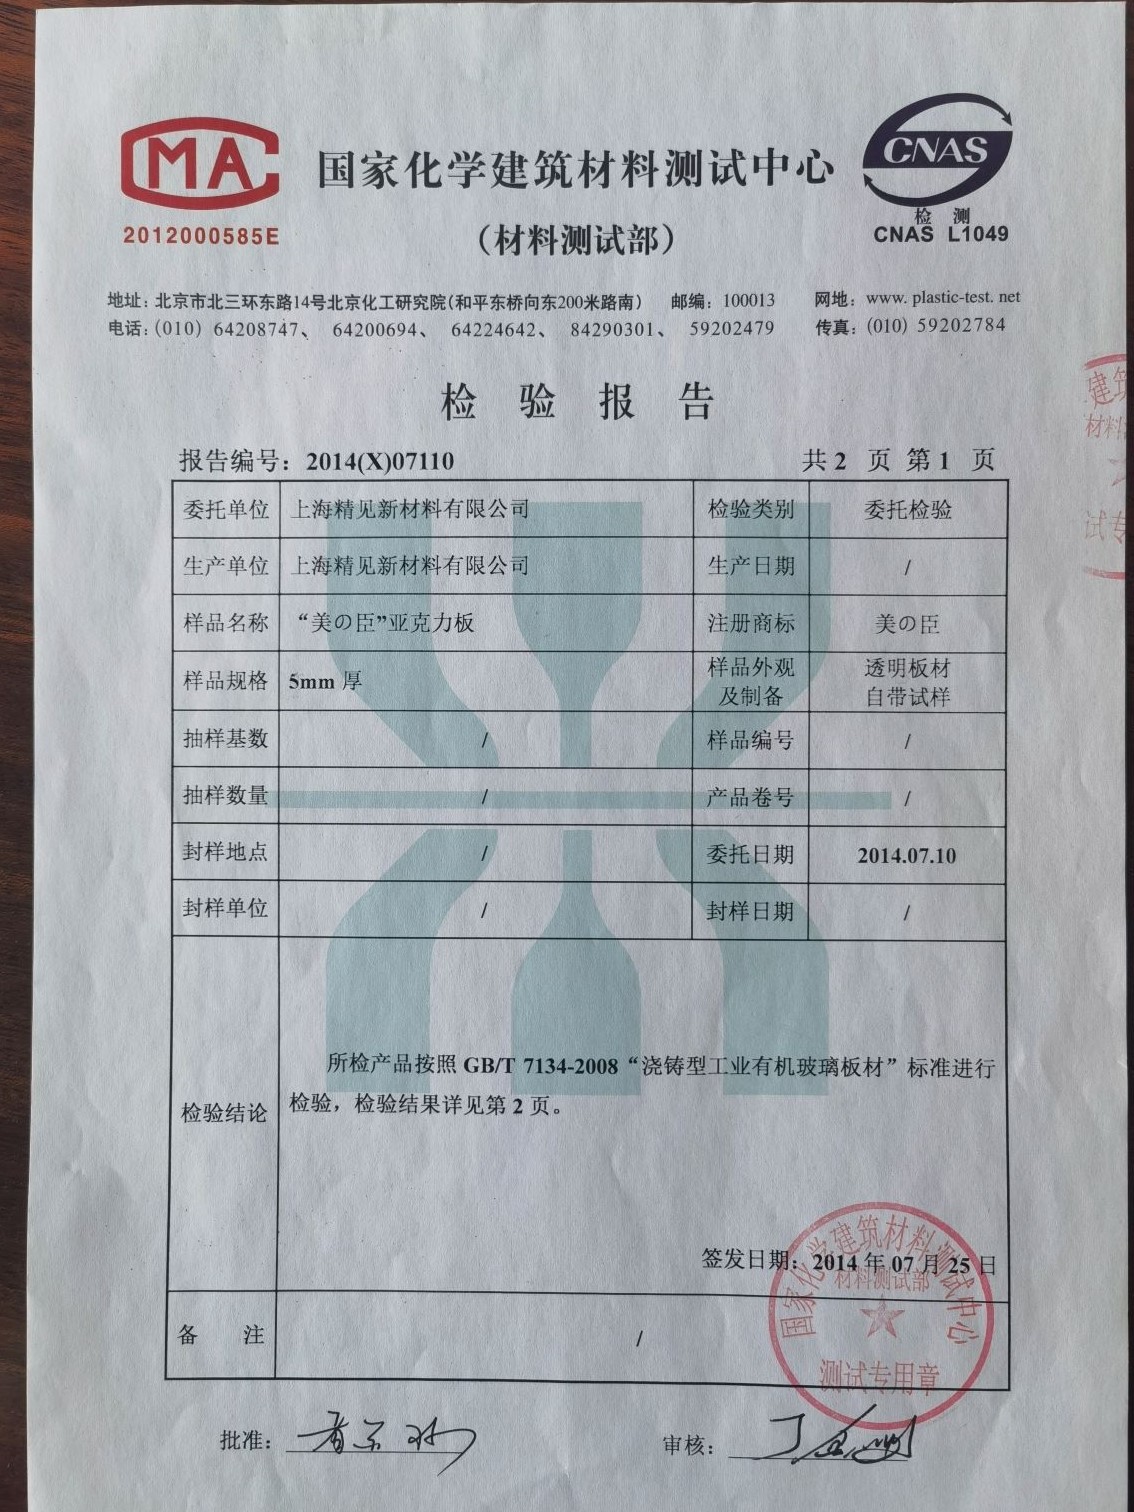 Shanghai Kingscope New Material Co., Ltd. Certifications